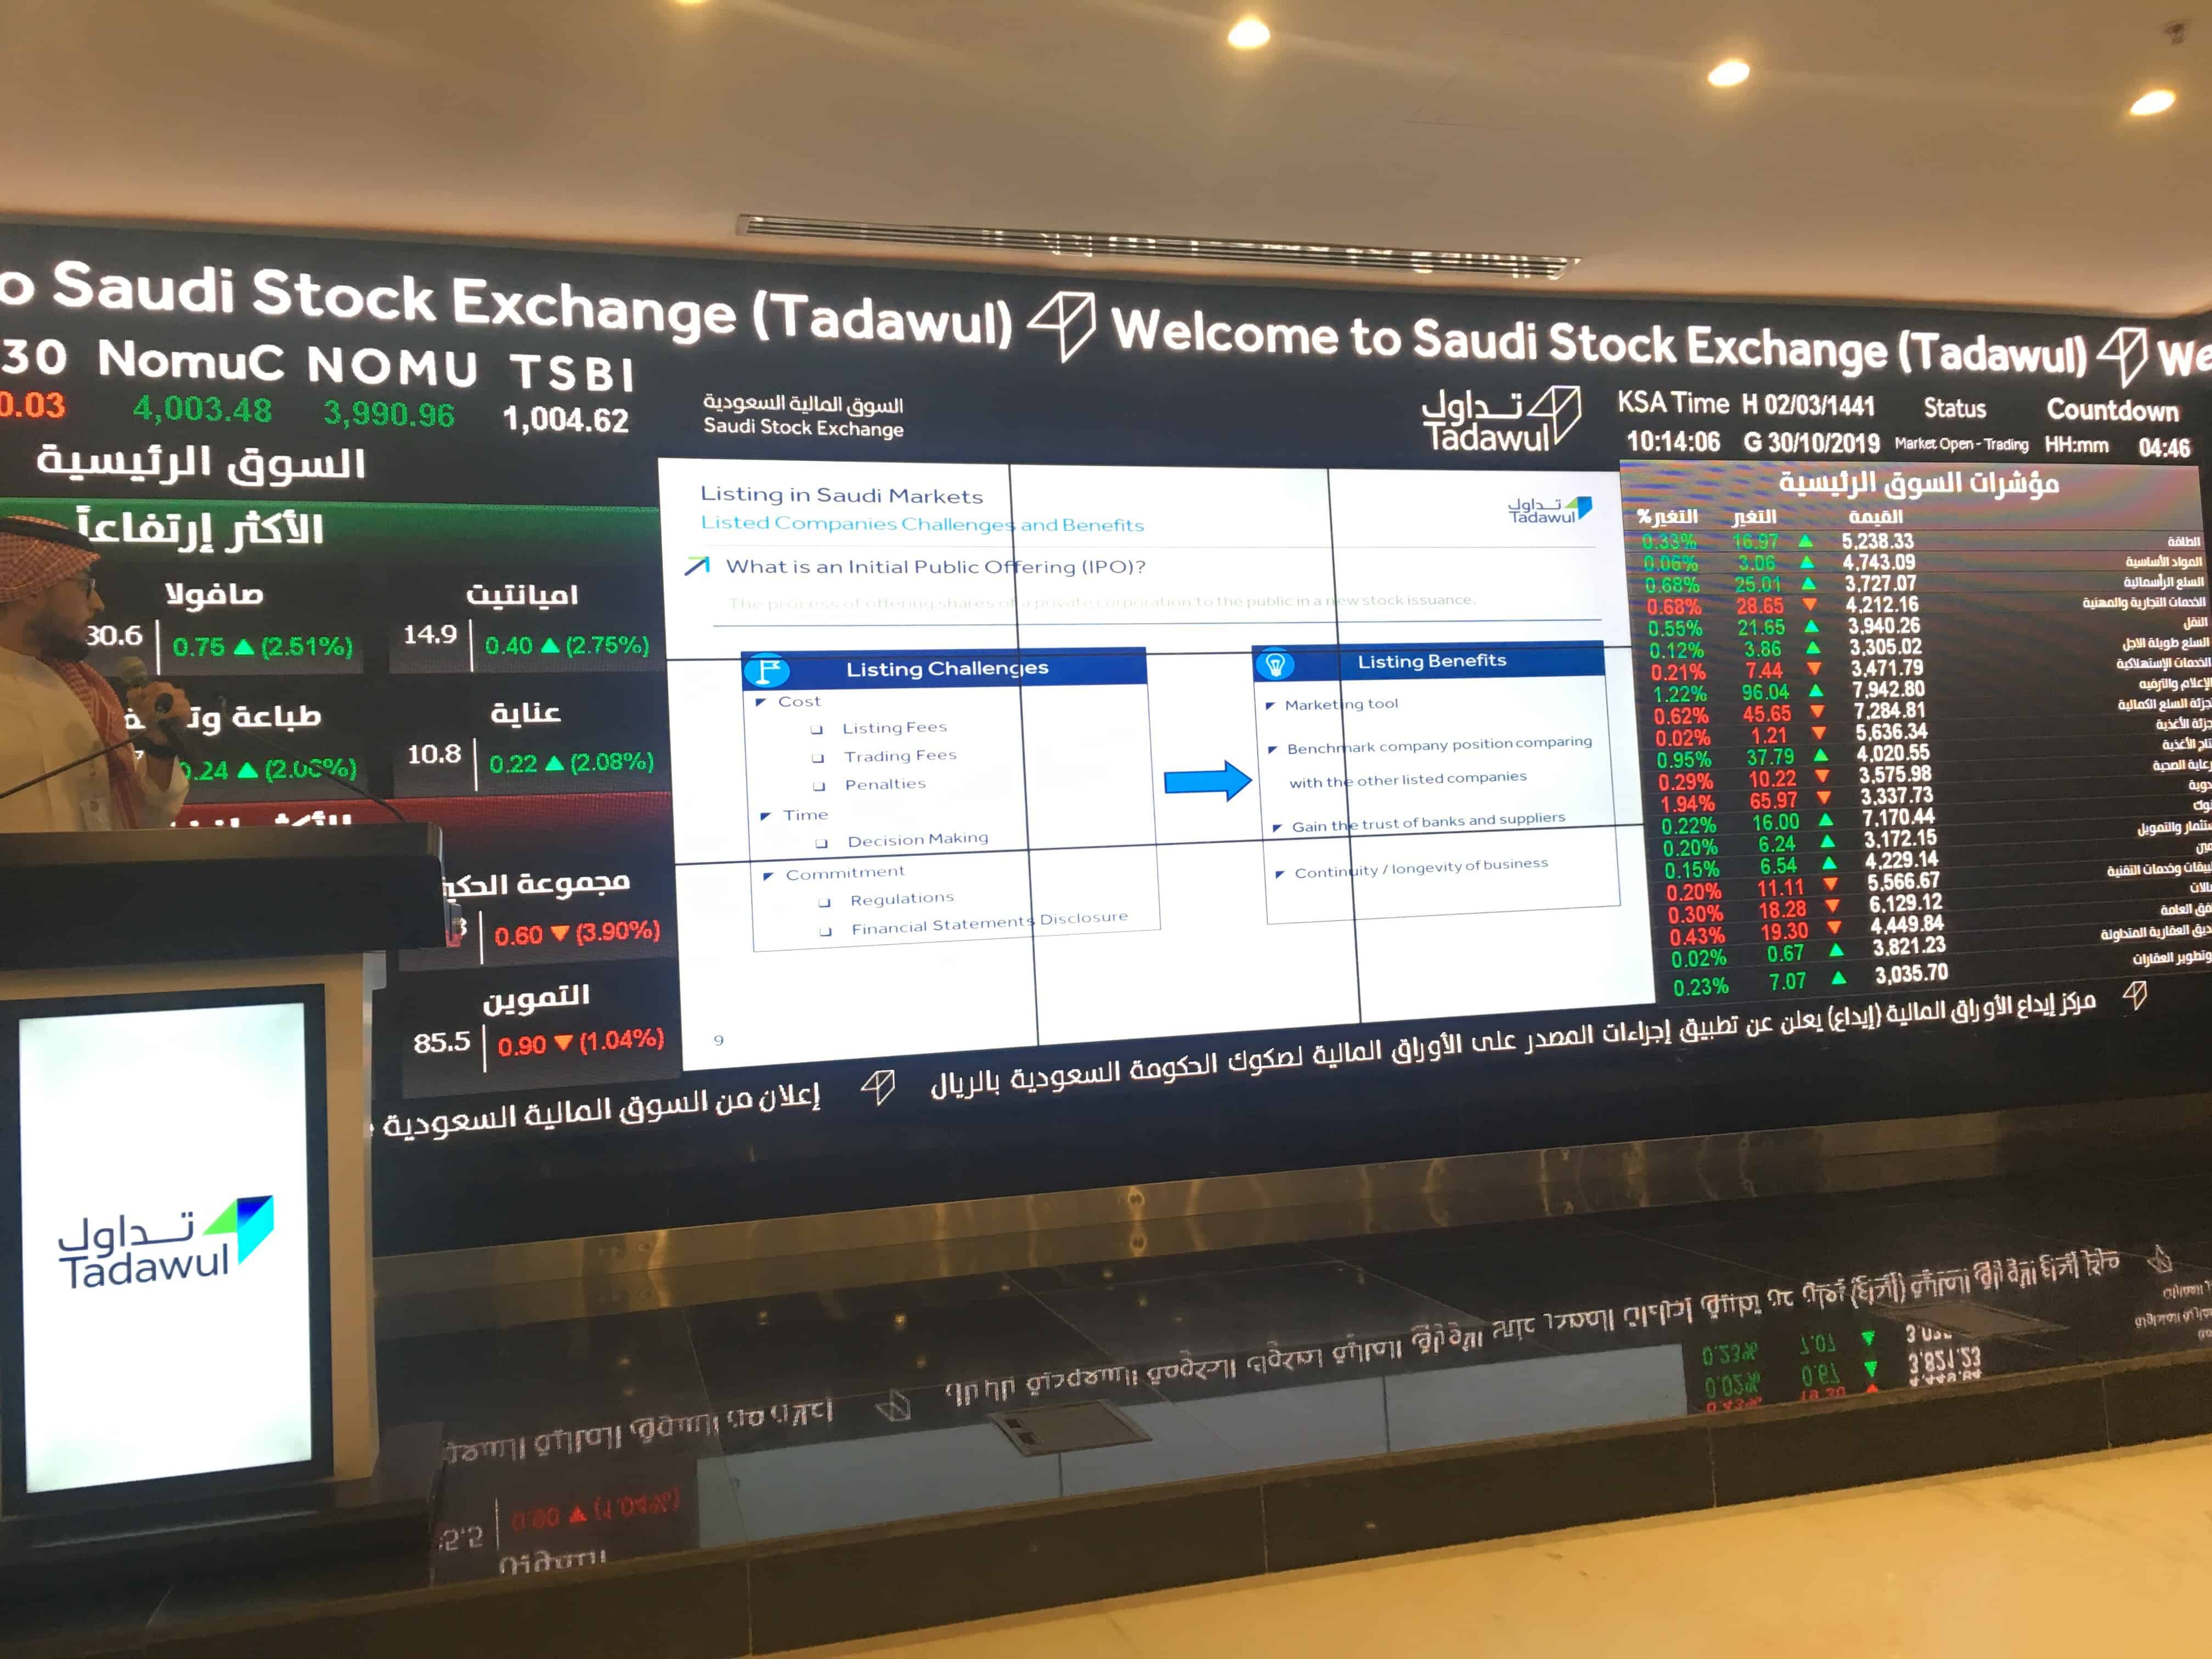 Field Visit to Saudi Stock Exchange Tadawul